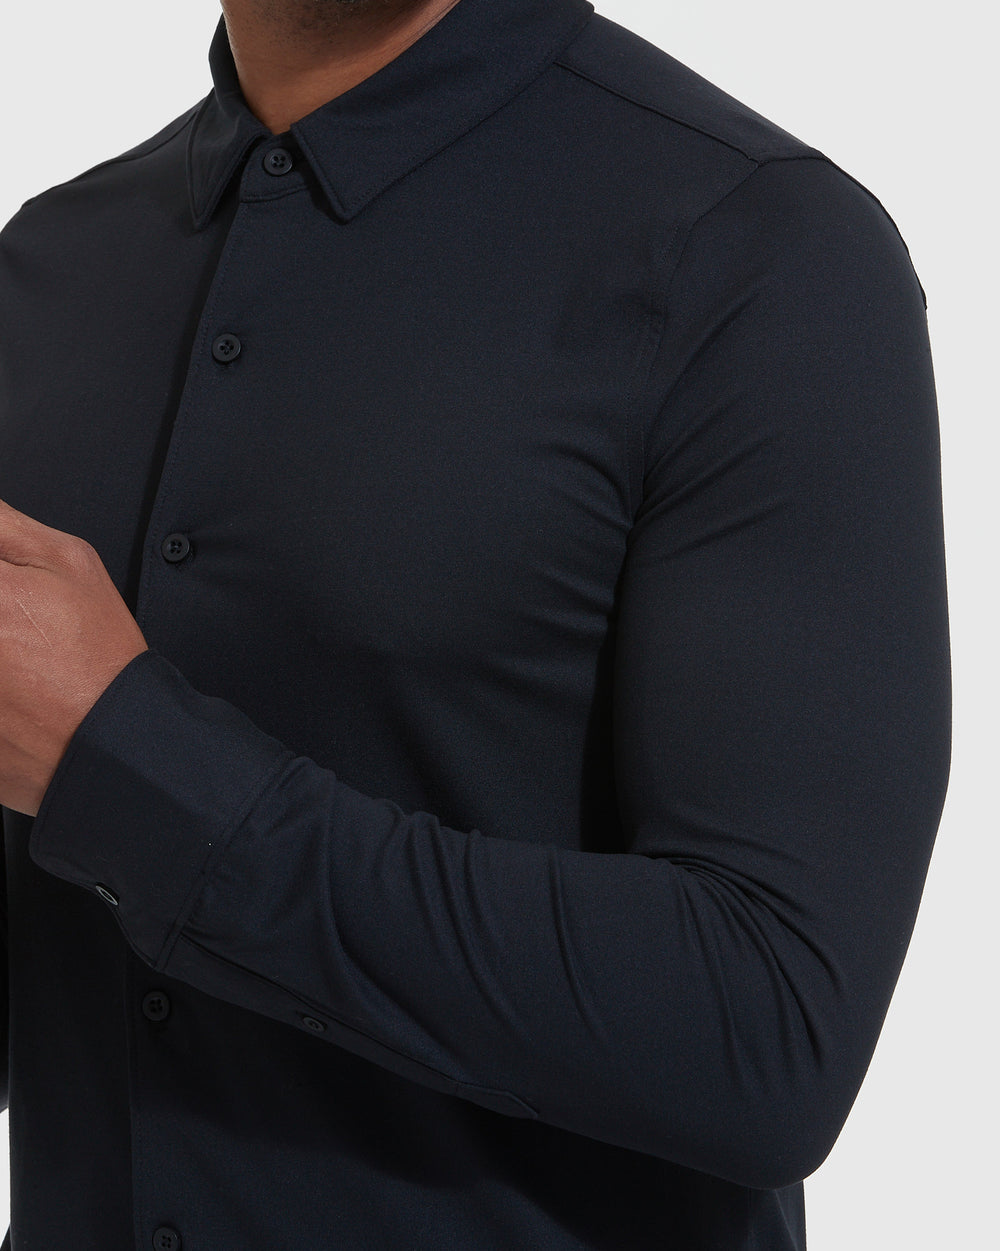 Black Long Sleeve Do-It-All Comfort Shirt